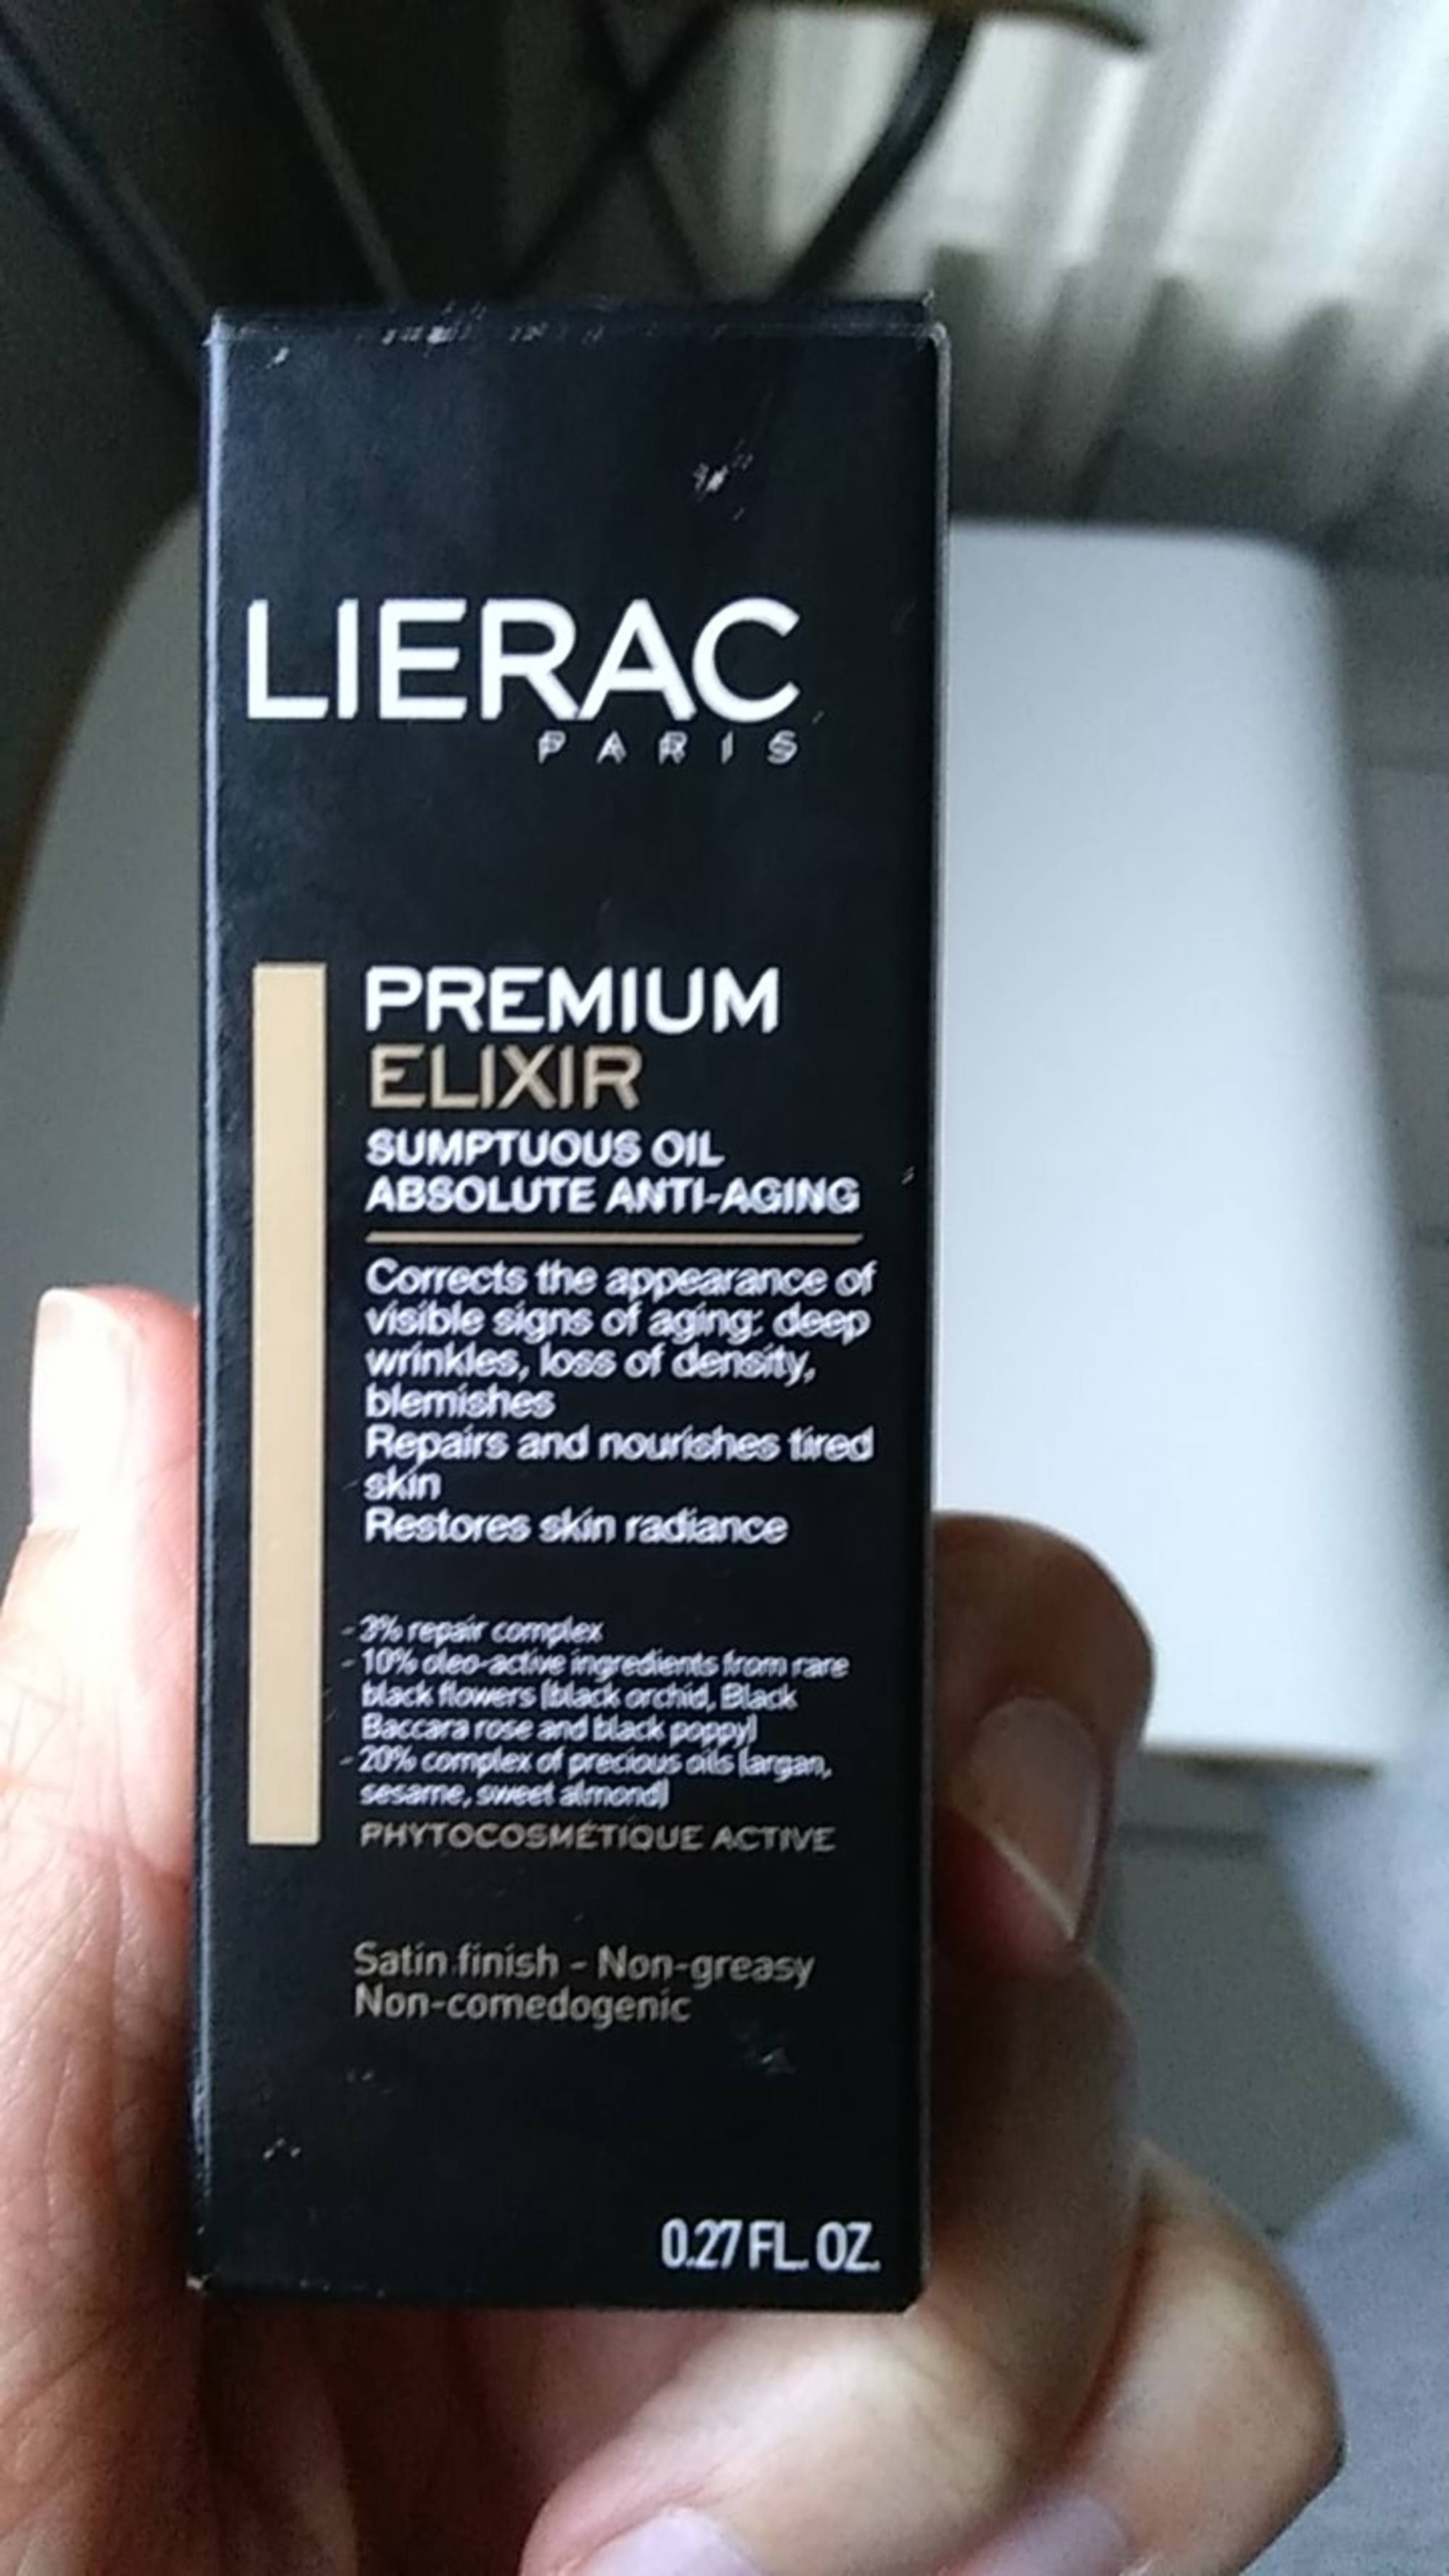 LIÉRAC - Premium elixir - Sumptuous oil absolute anti-aging